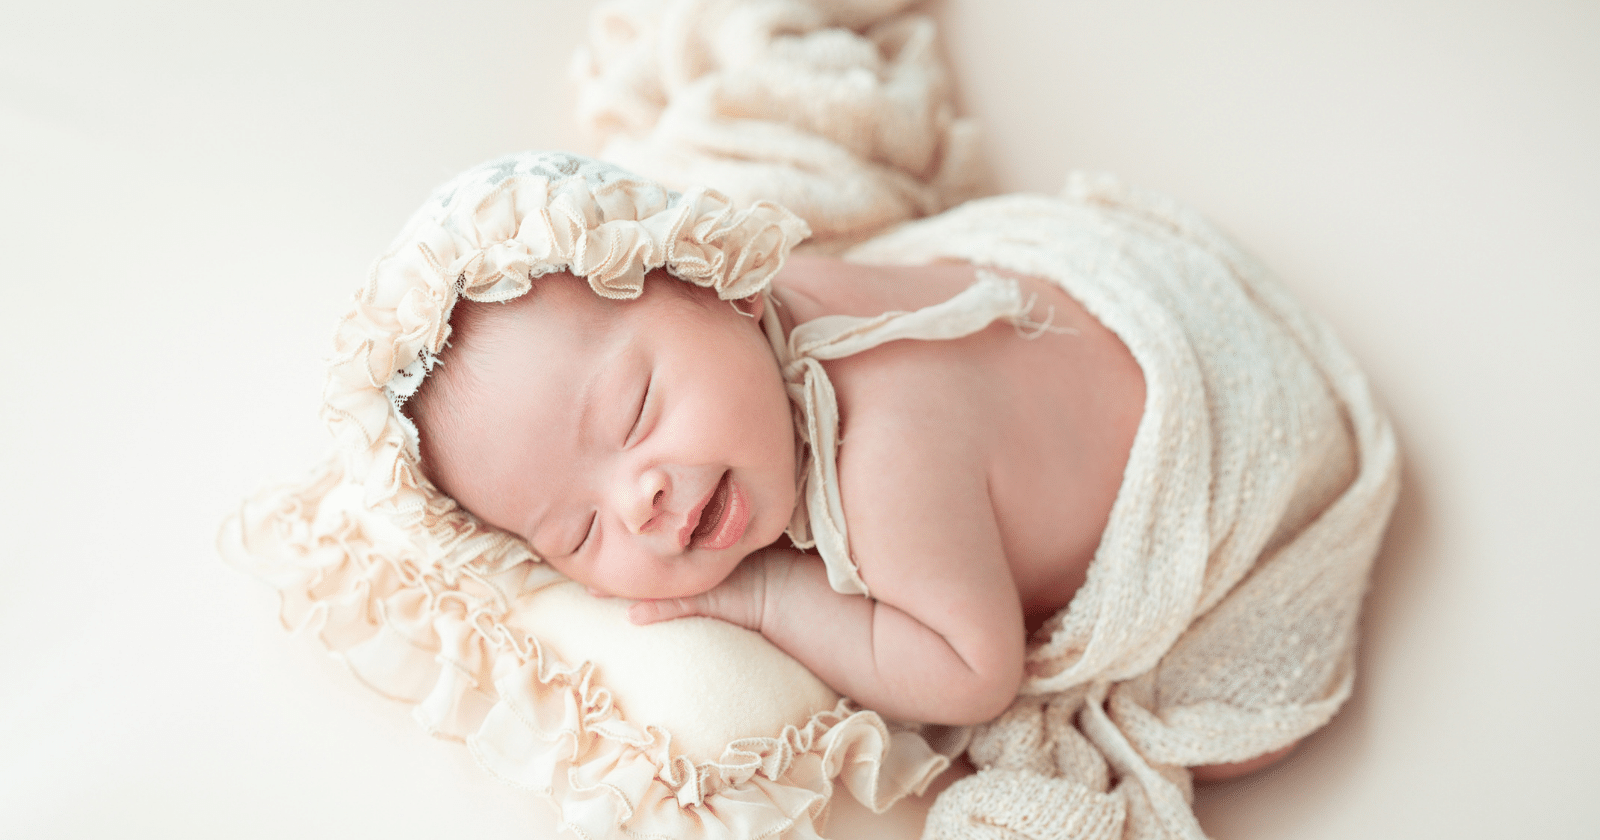 bebekler uyurken neden güler?